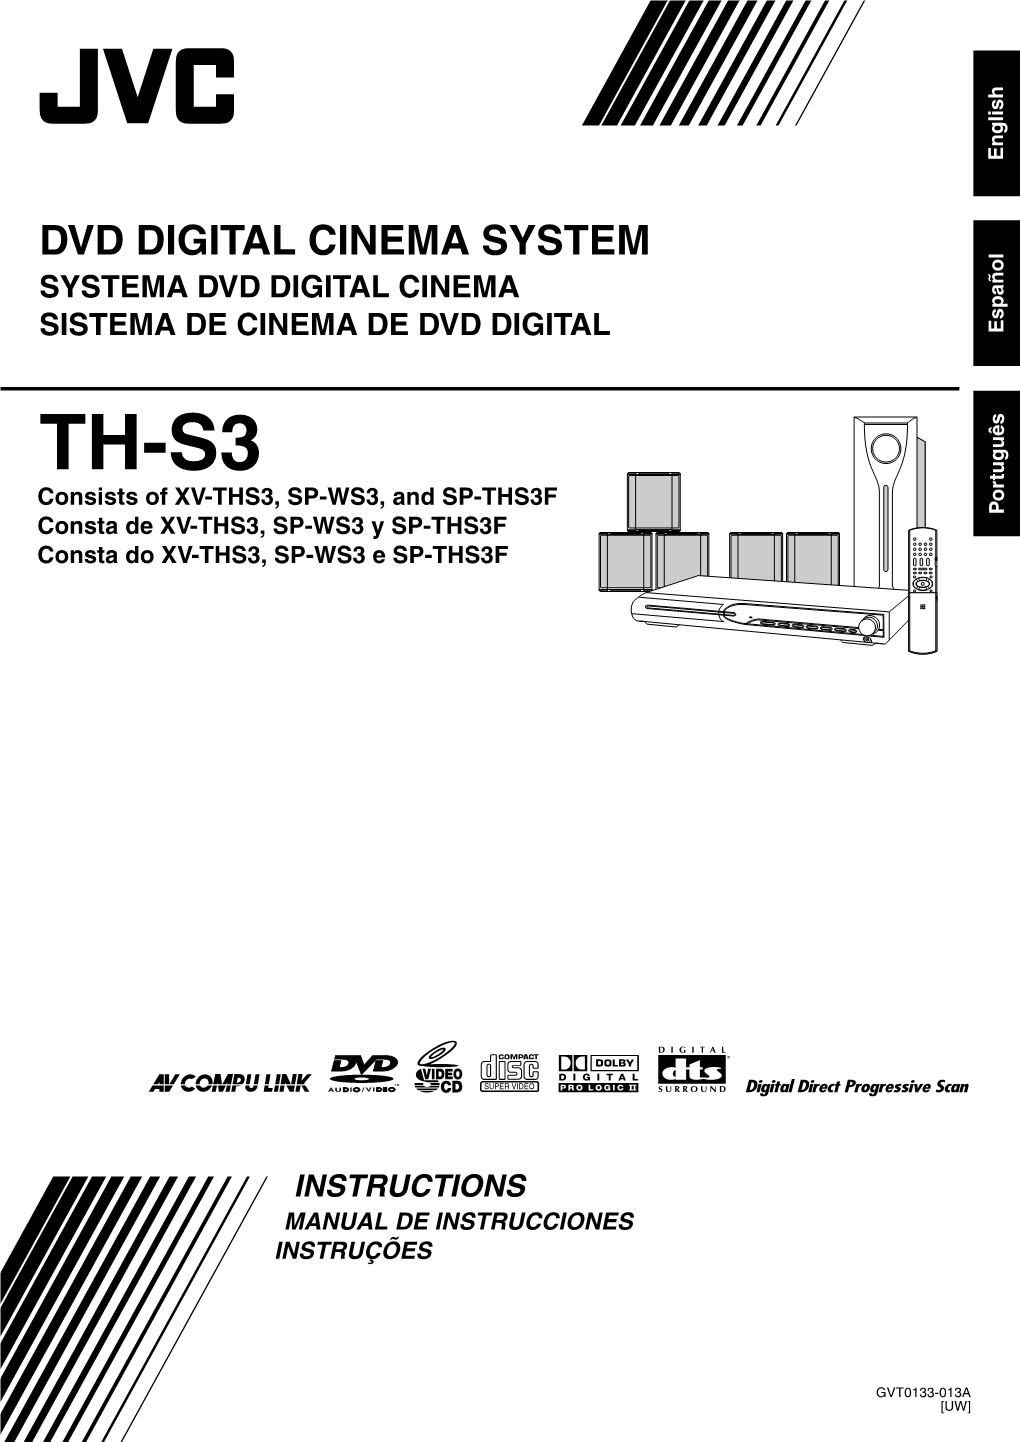 Dvd Digital Cinema System